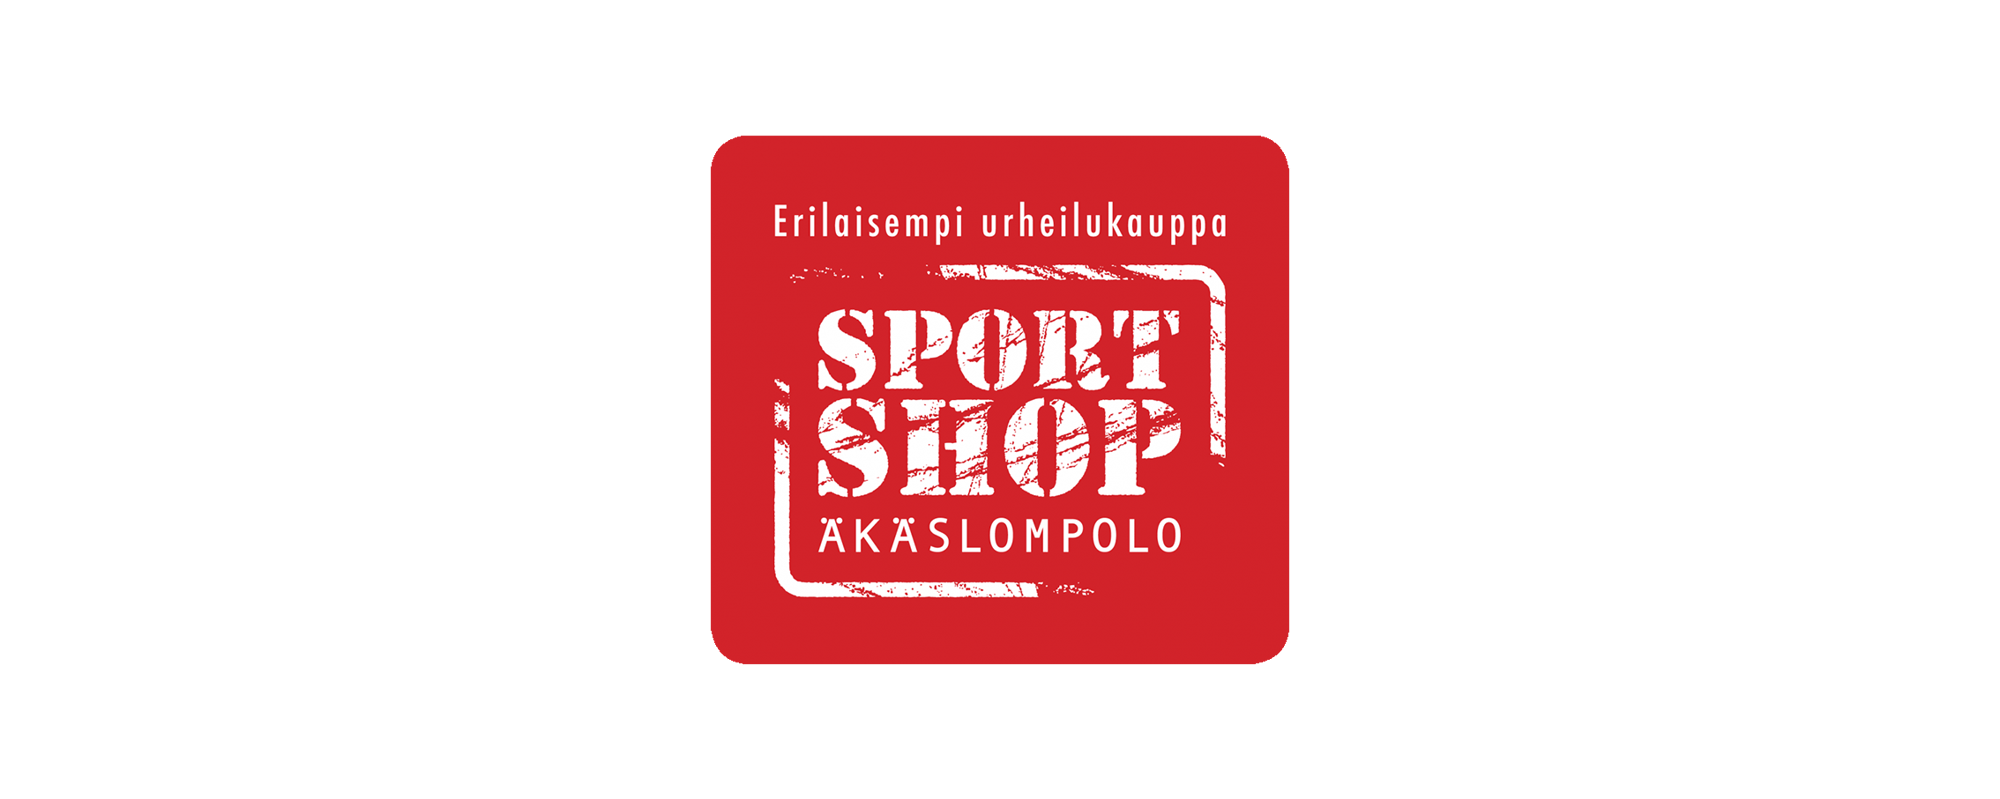 Äkäslompolo Sportshopin logo.